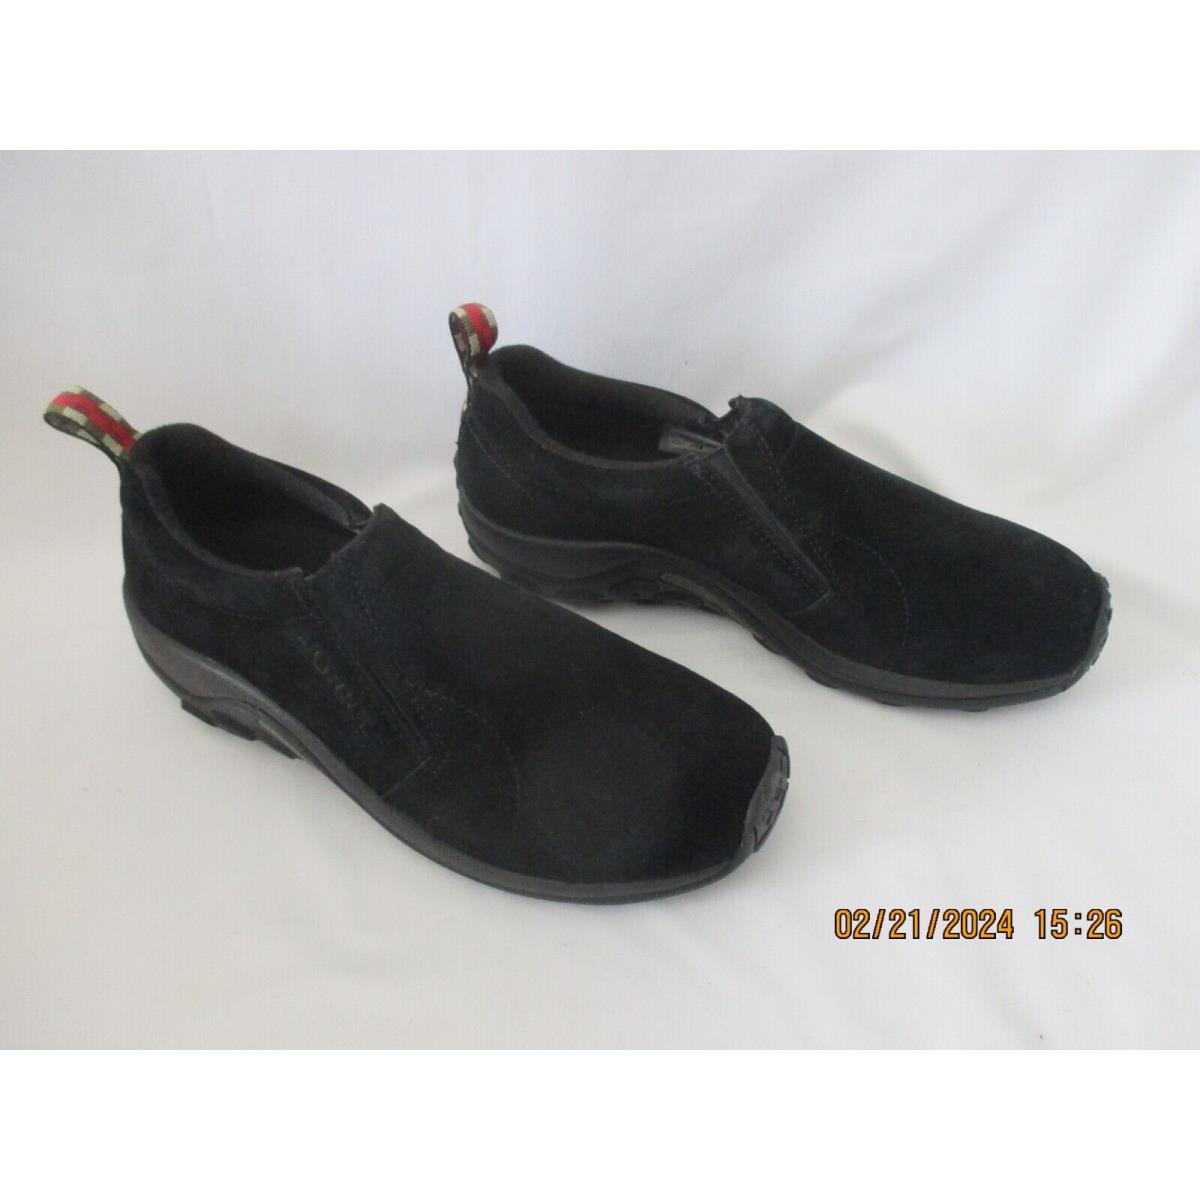 Merrell Jungle Moc Midnight Black Suede Slip-on Shoes Men Size 8.5